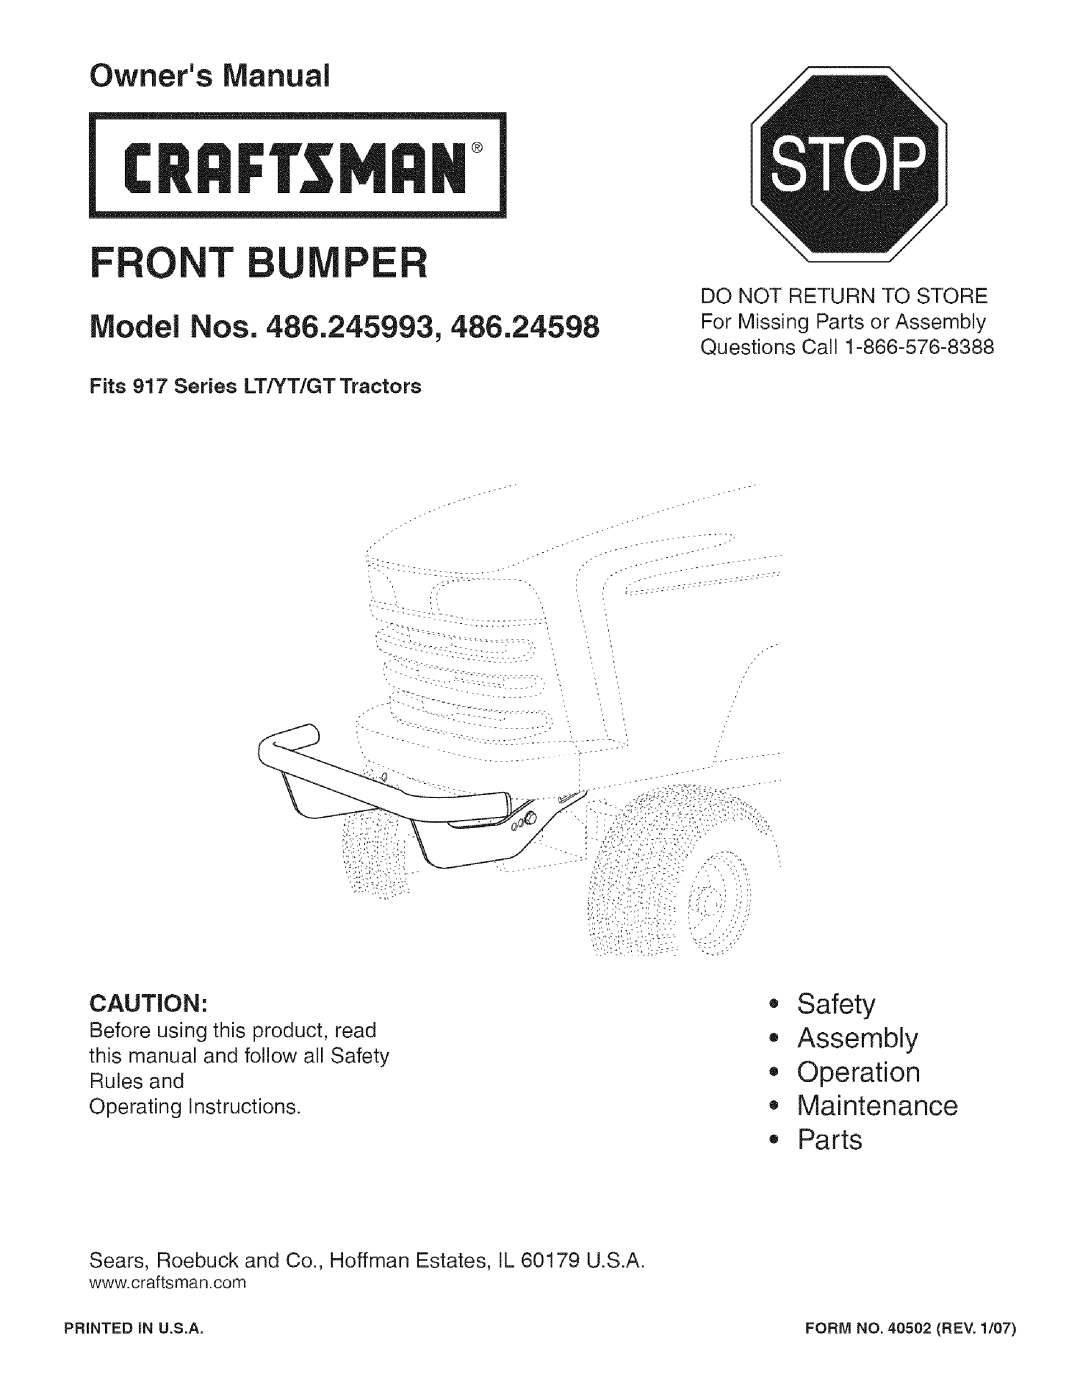 Craftsman 486.24598, 486.245993 owner manual Safety Assembly Operation Maintenance Parts, CRRFr. NRN, Front, Model Nos 